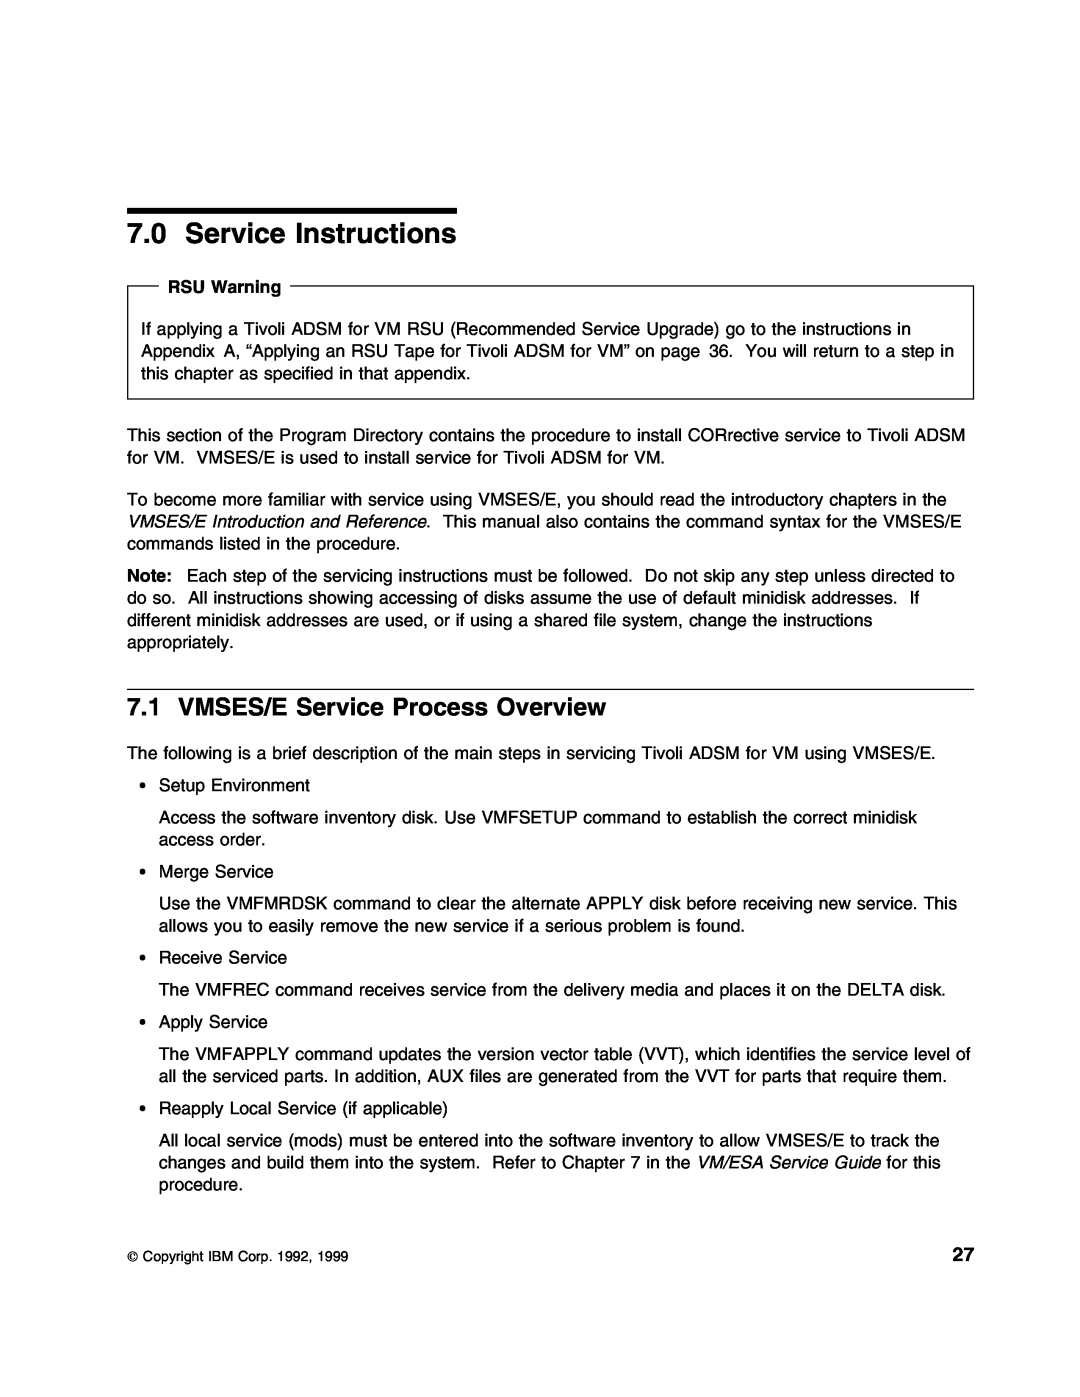 IBM 5697-VM3 manual Service Instructions, VMSES/E Service Process Overview, RSU Warning 